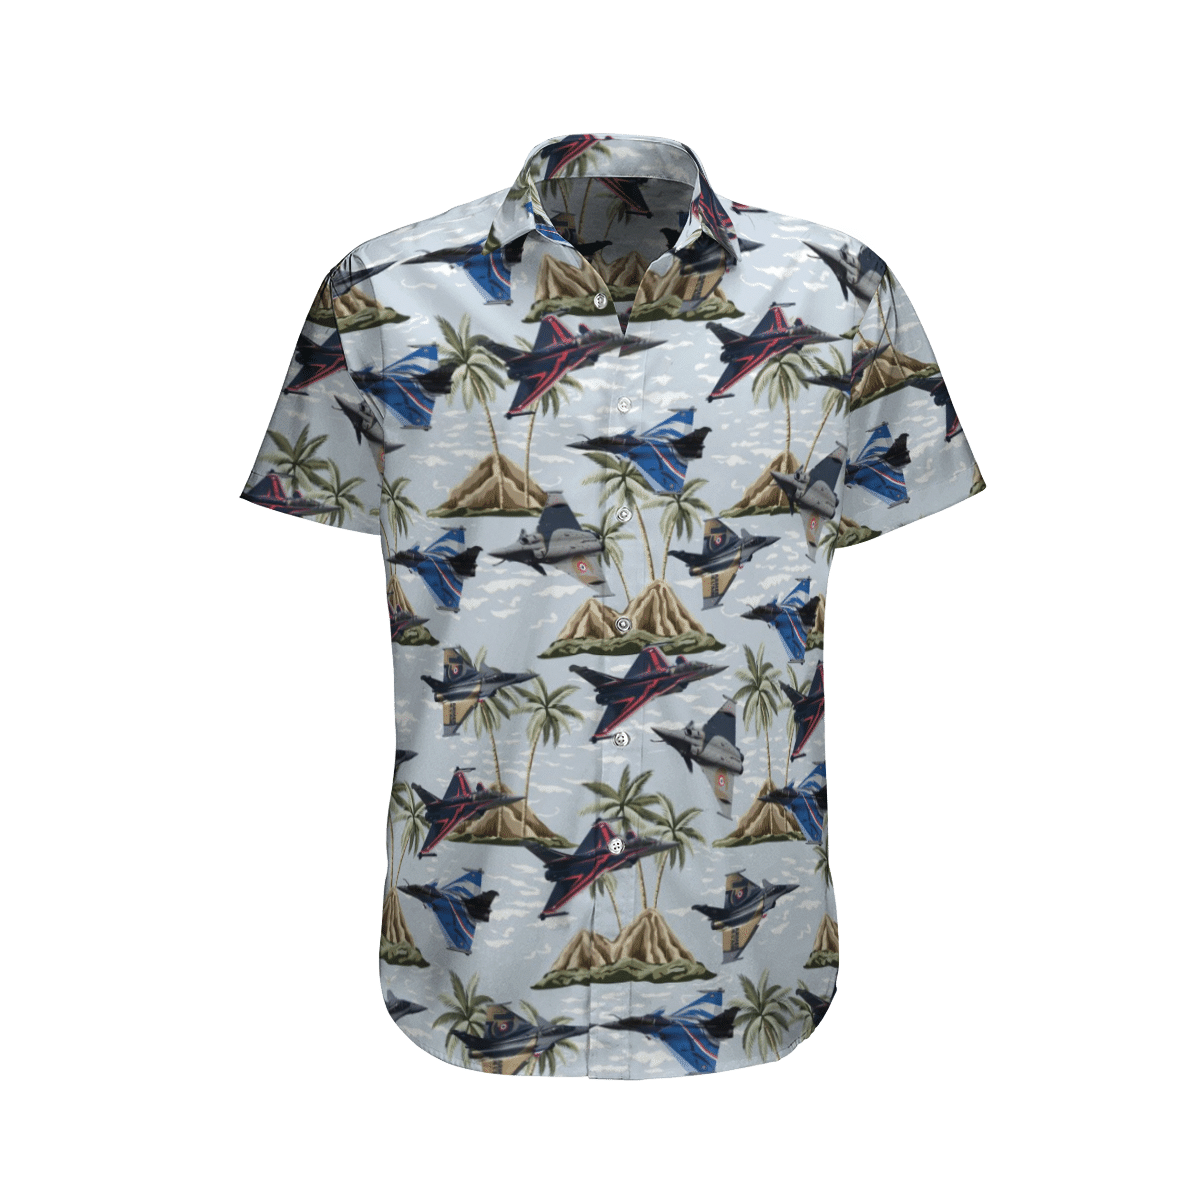 Get a new Hawaiian shirt to enjoy summer vacation 150